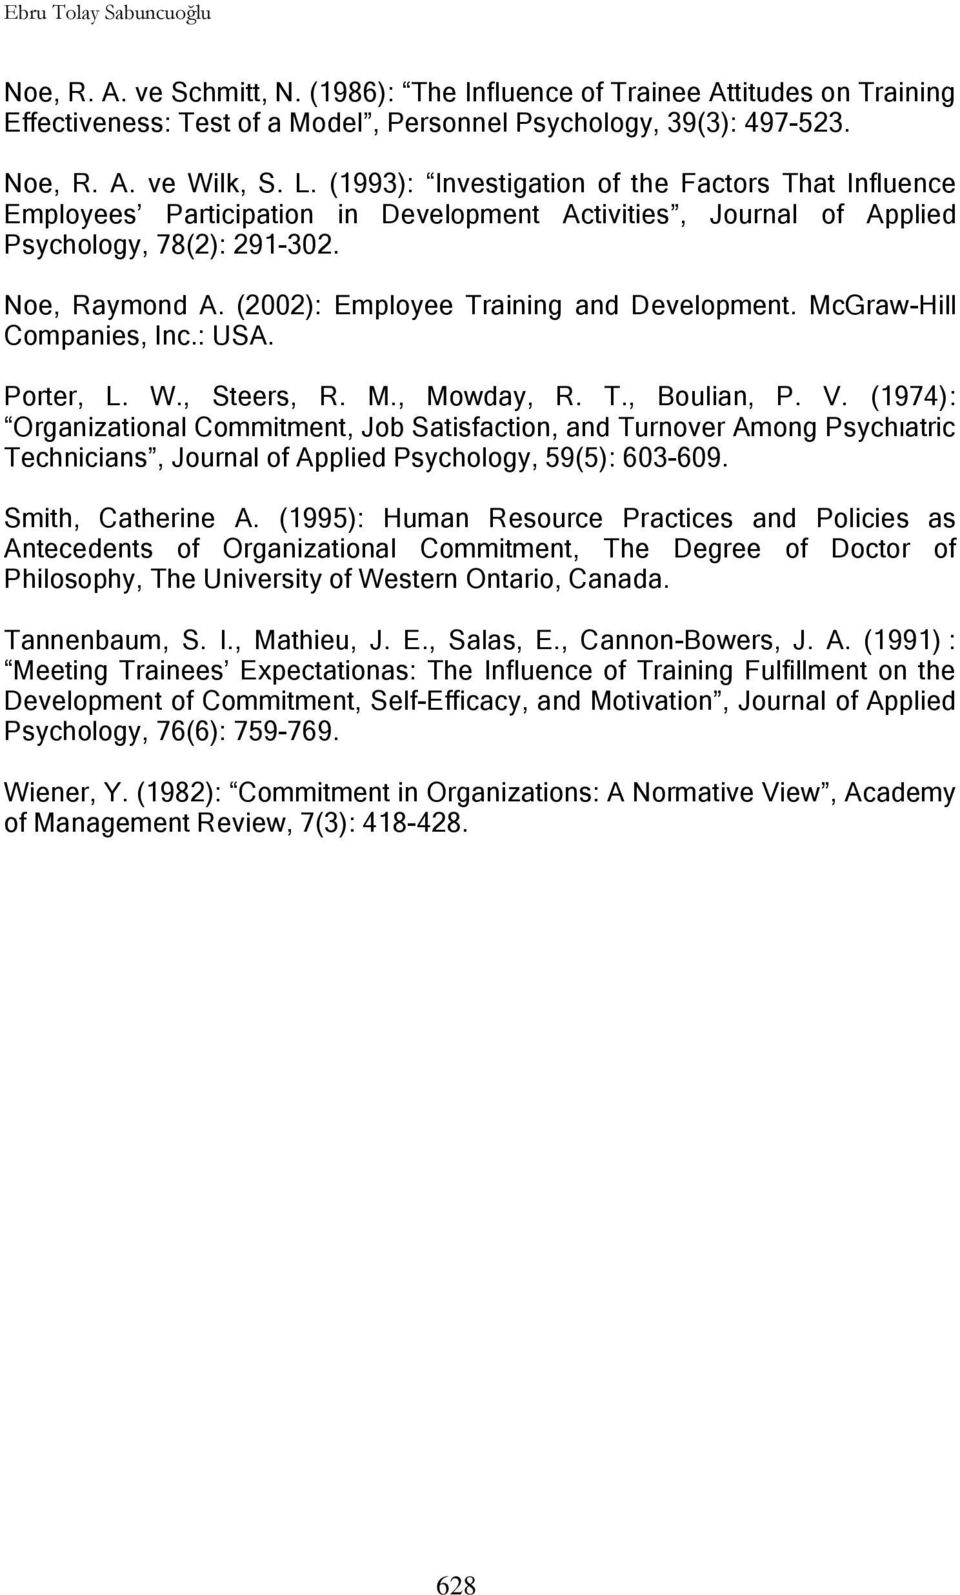 (2002): Employee Training and Development. McGraw-Hill Companies, Inc.: USA. Porter, L. W., Steers, R. M., Mowday, R. T., Boulian, P. V.